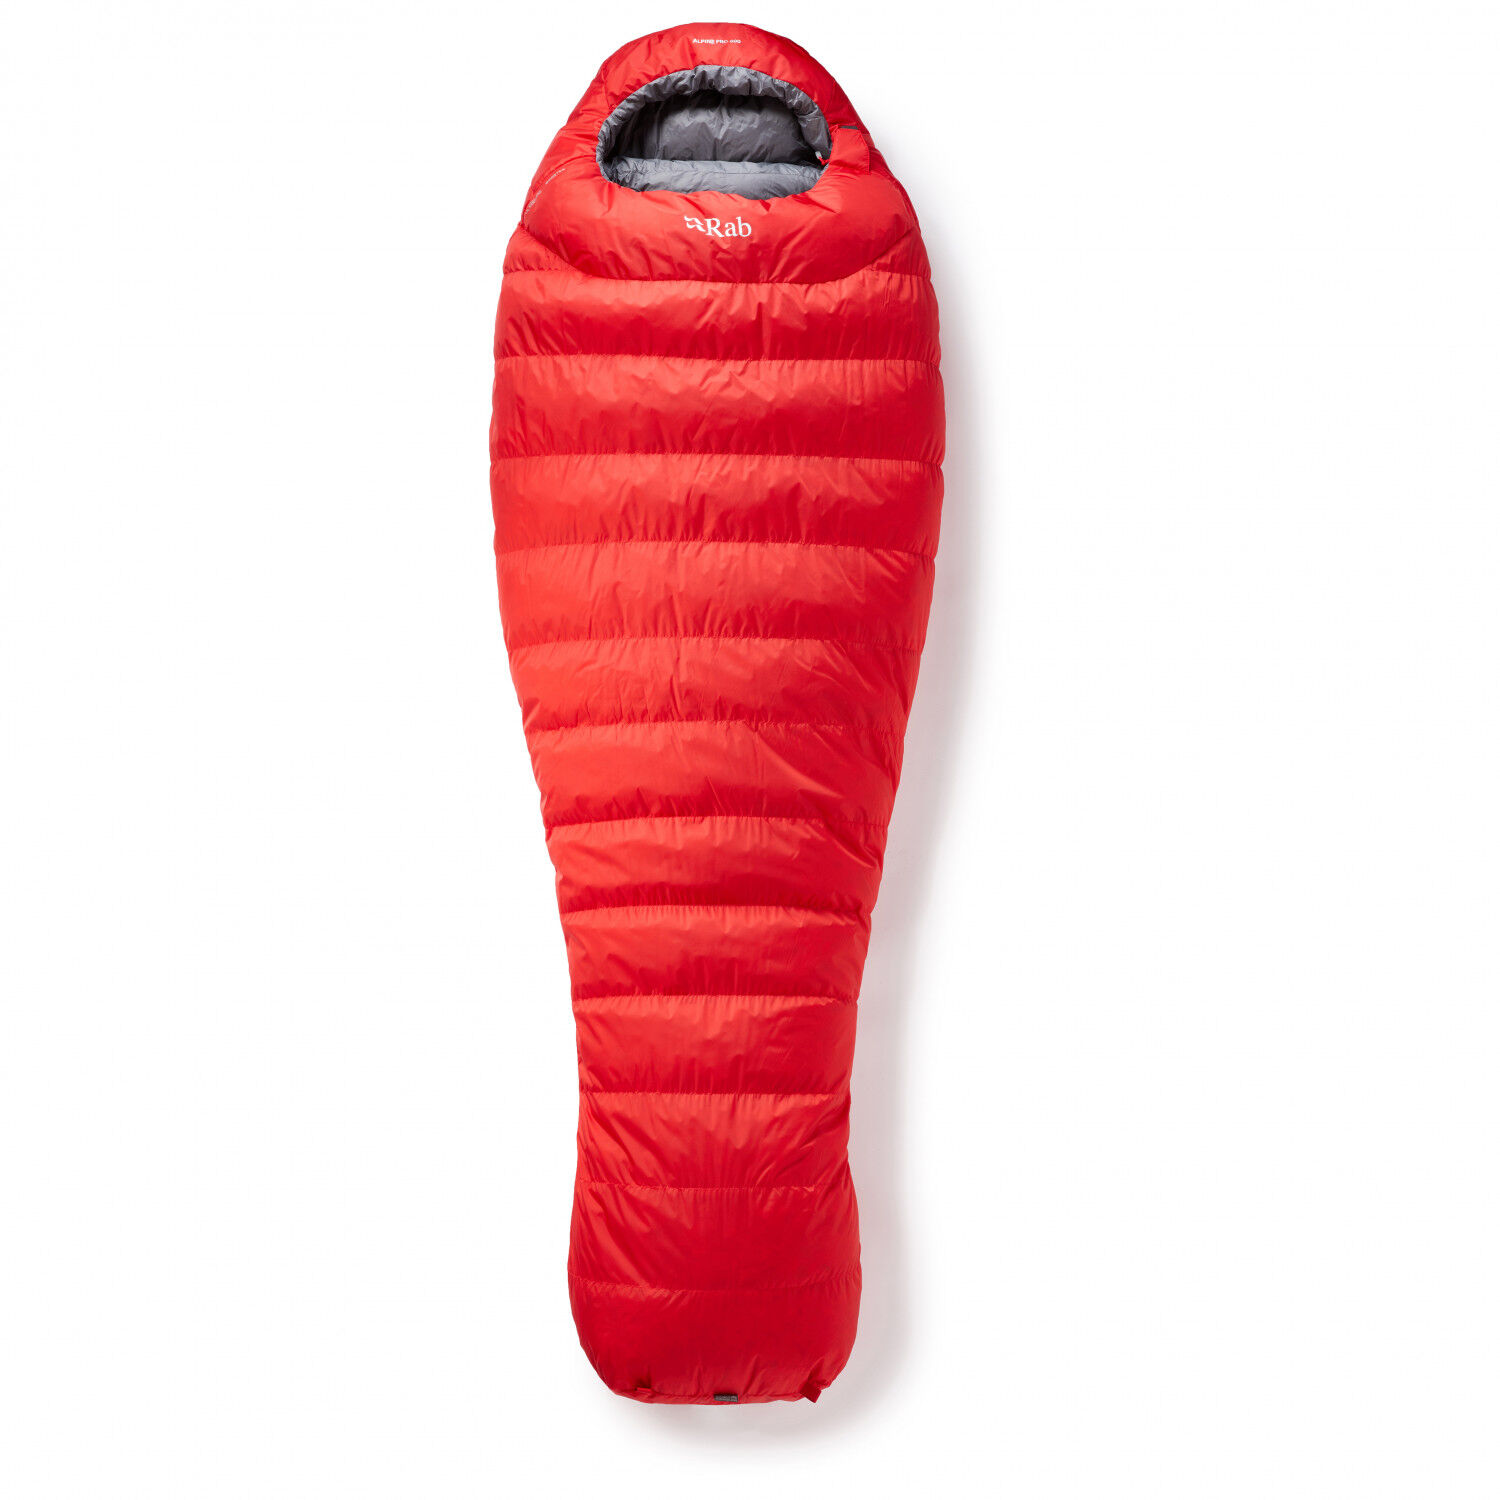 Rab Alpine Pro 600 - Down sleeping bag